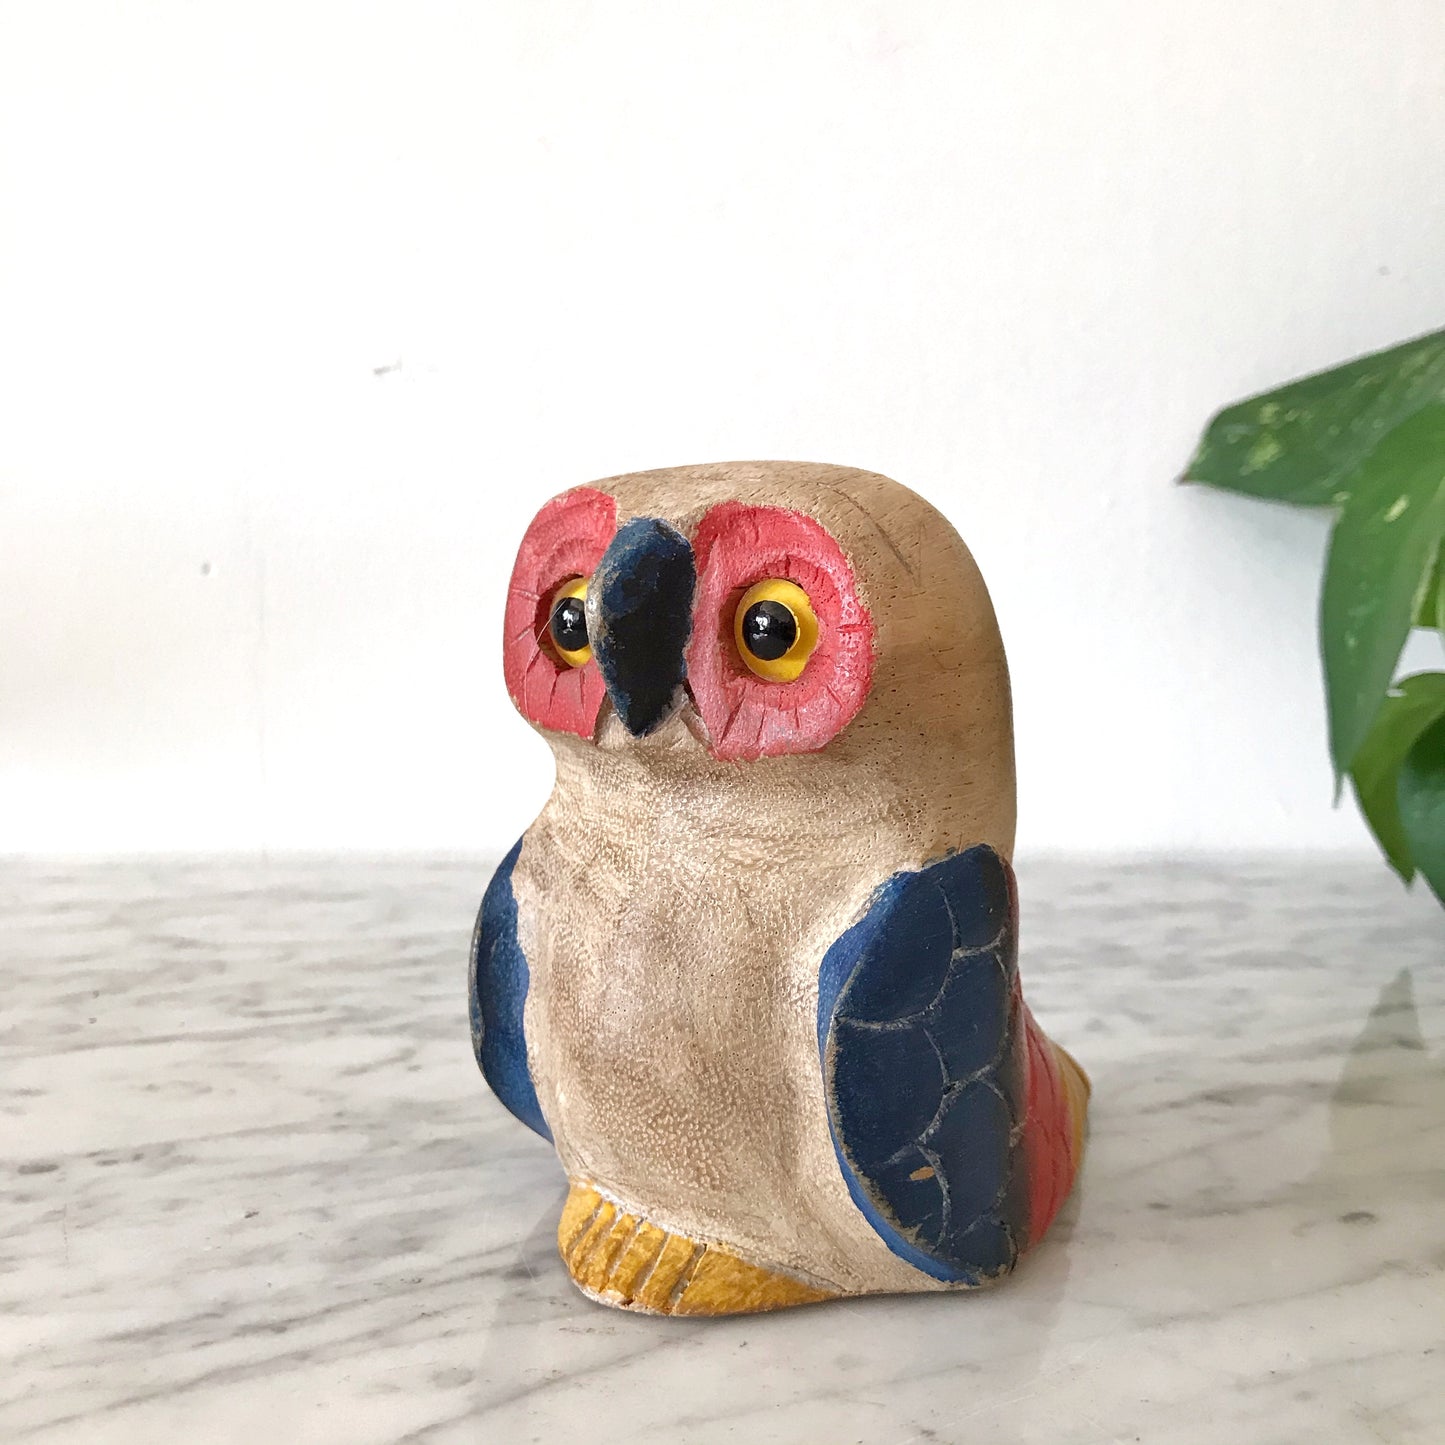 Vintage Carved Wood Owl